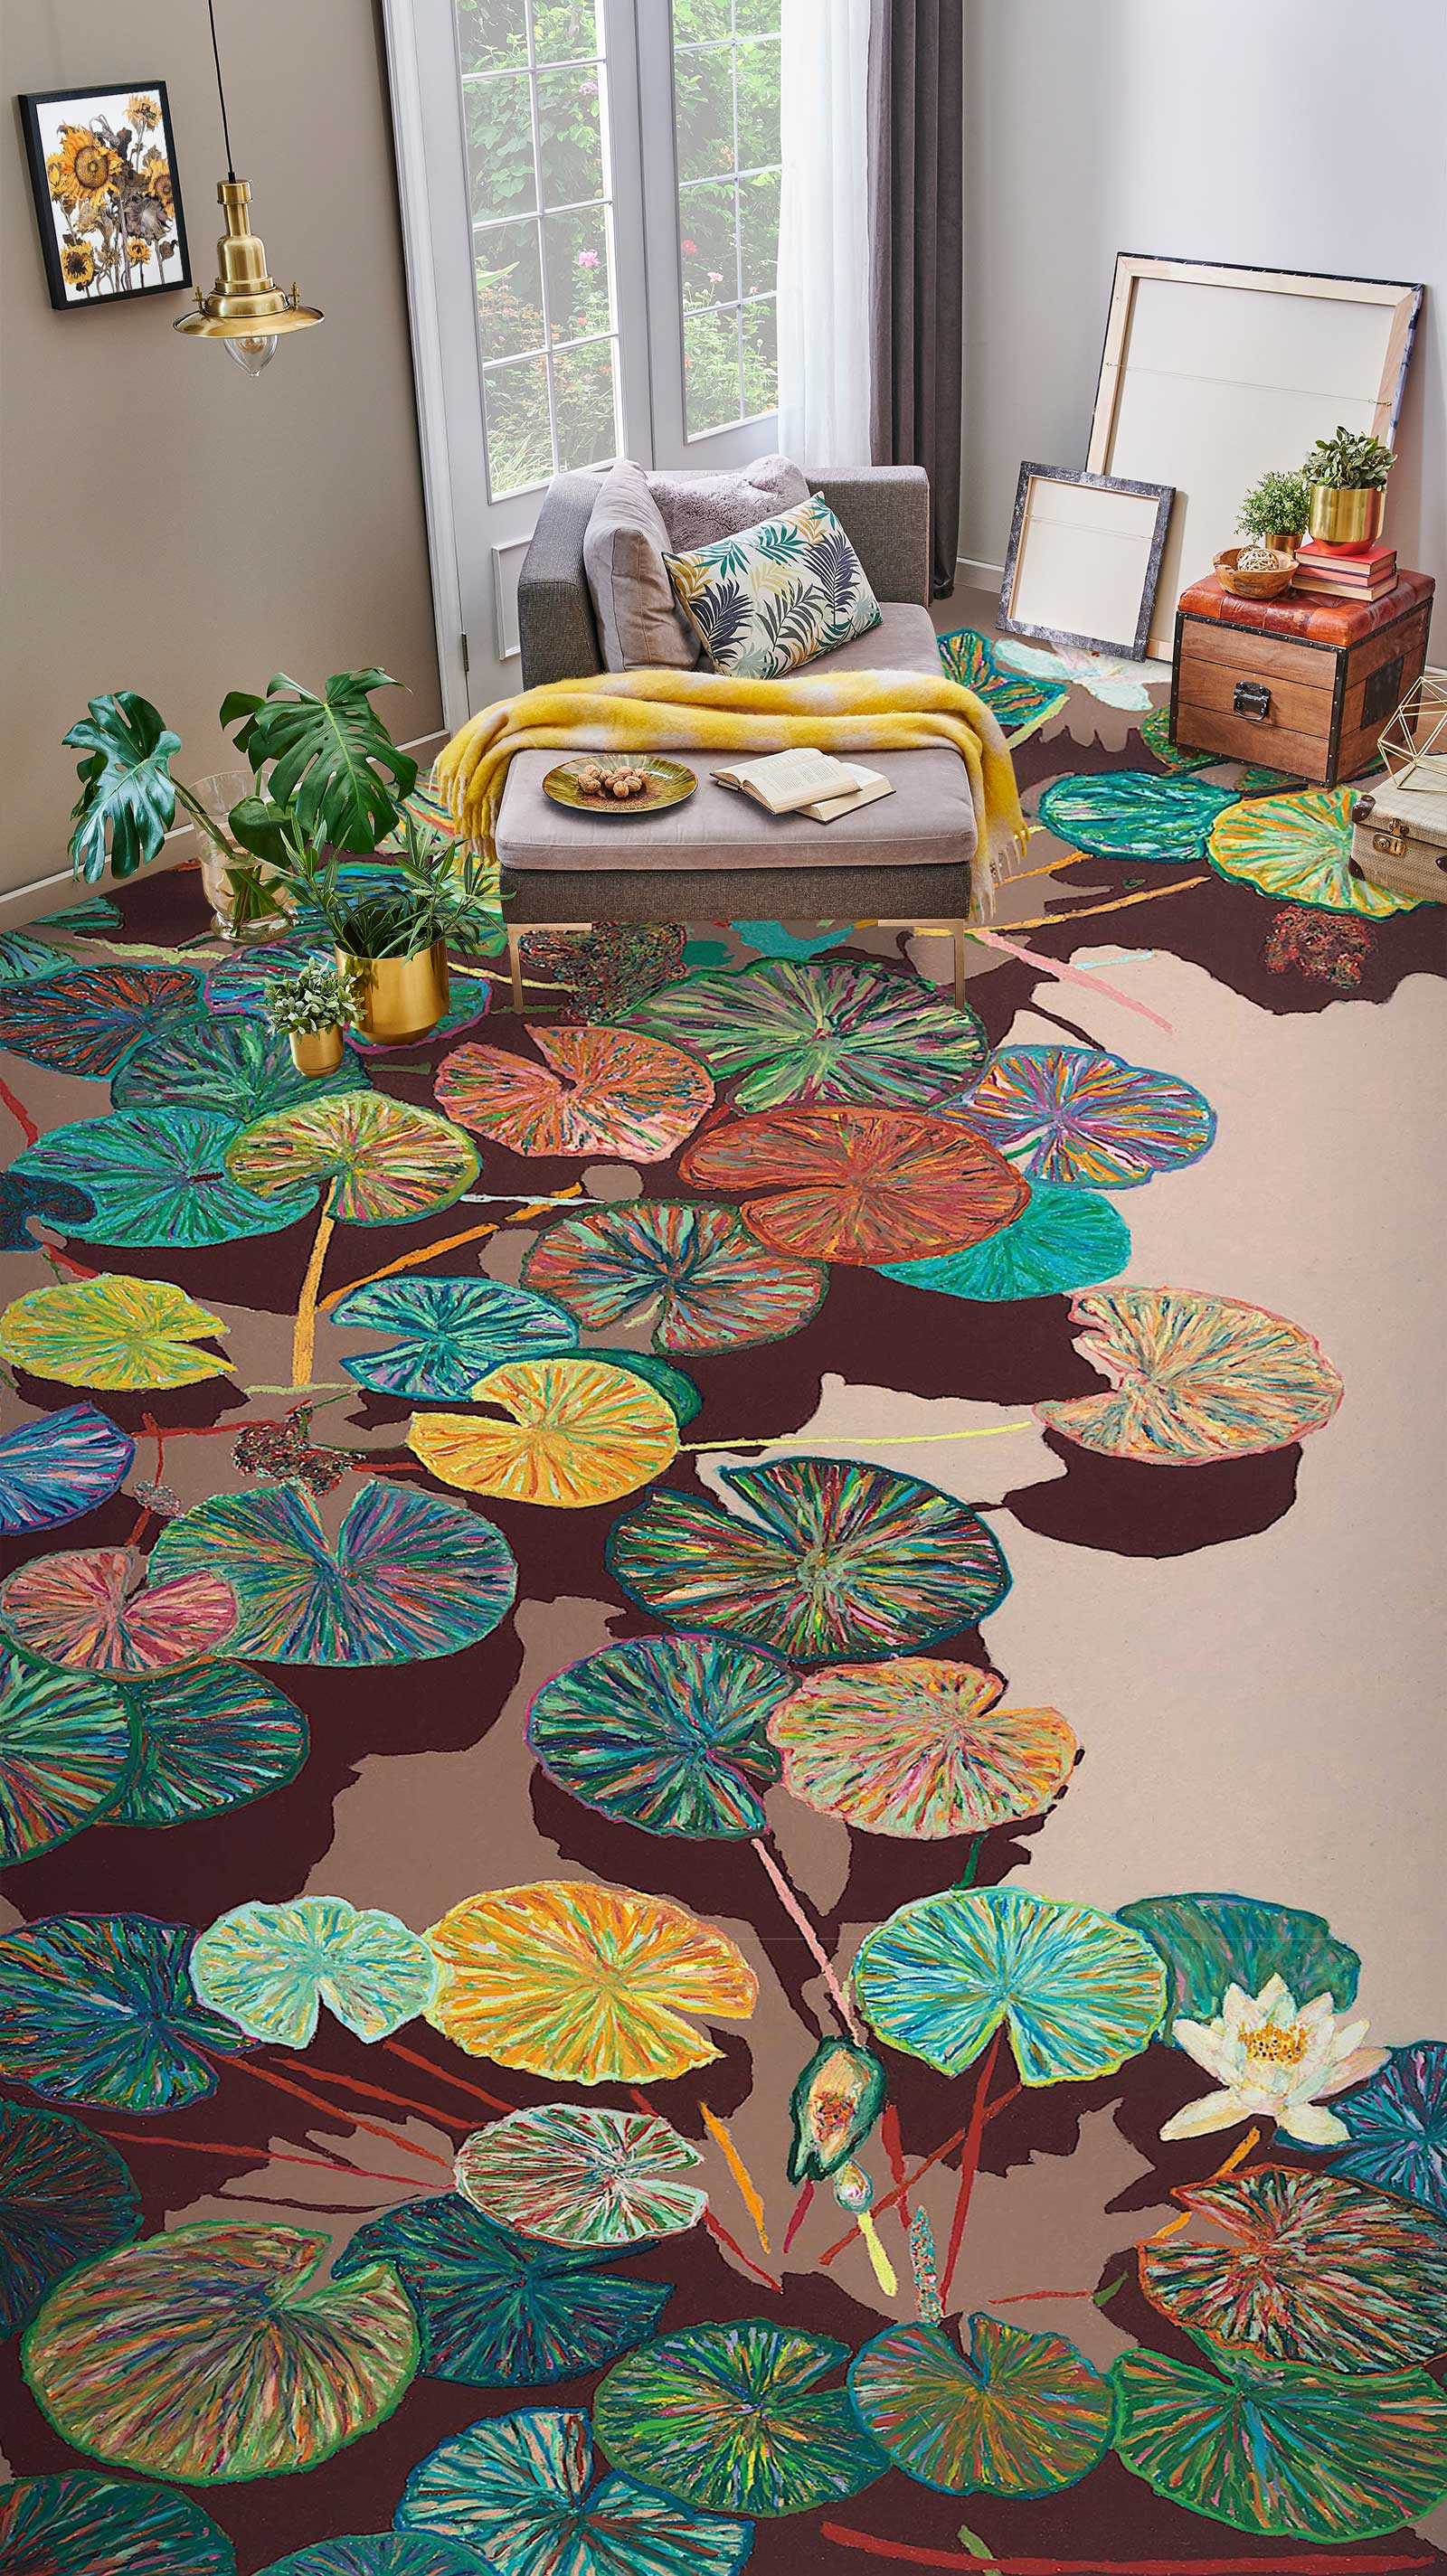 3D Lotus Pond Leaf Pattern 96116 Allan P. Friedlander Floor Mural  Wallpaper Murals Self-Adhesive Removable Print Epoxy